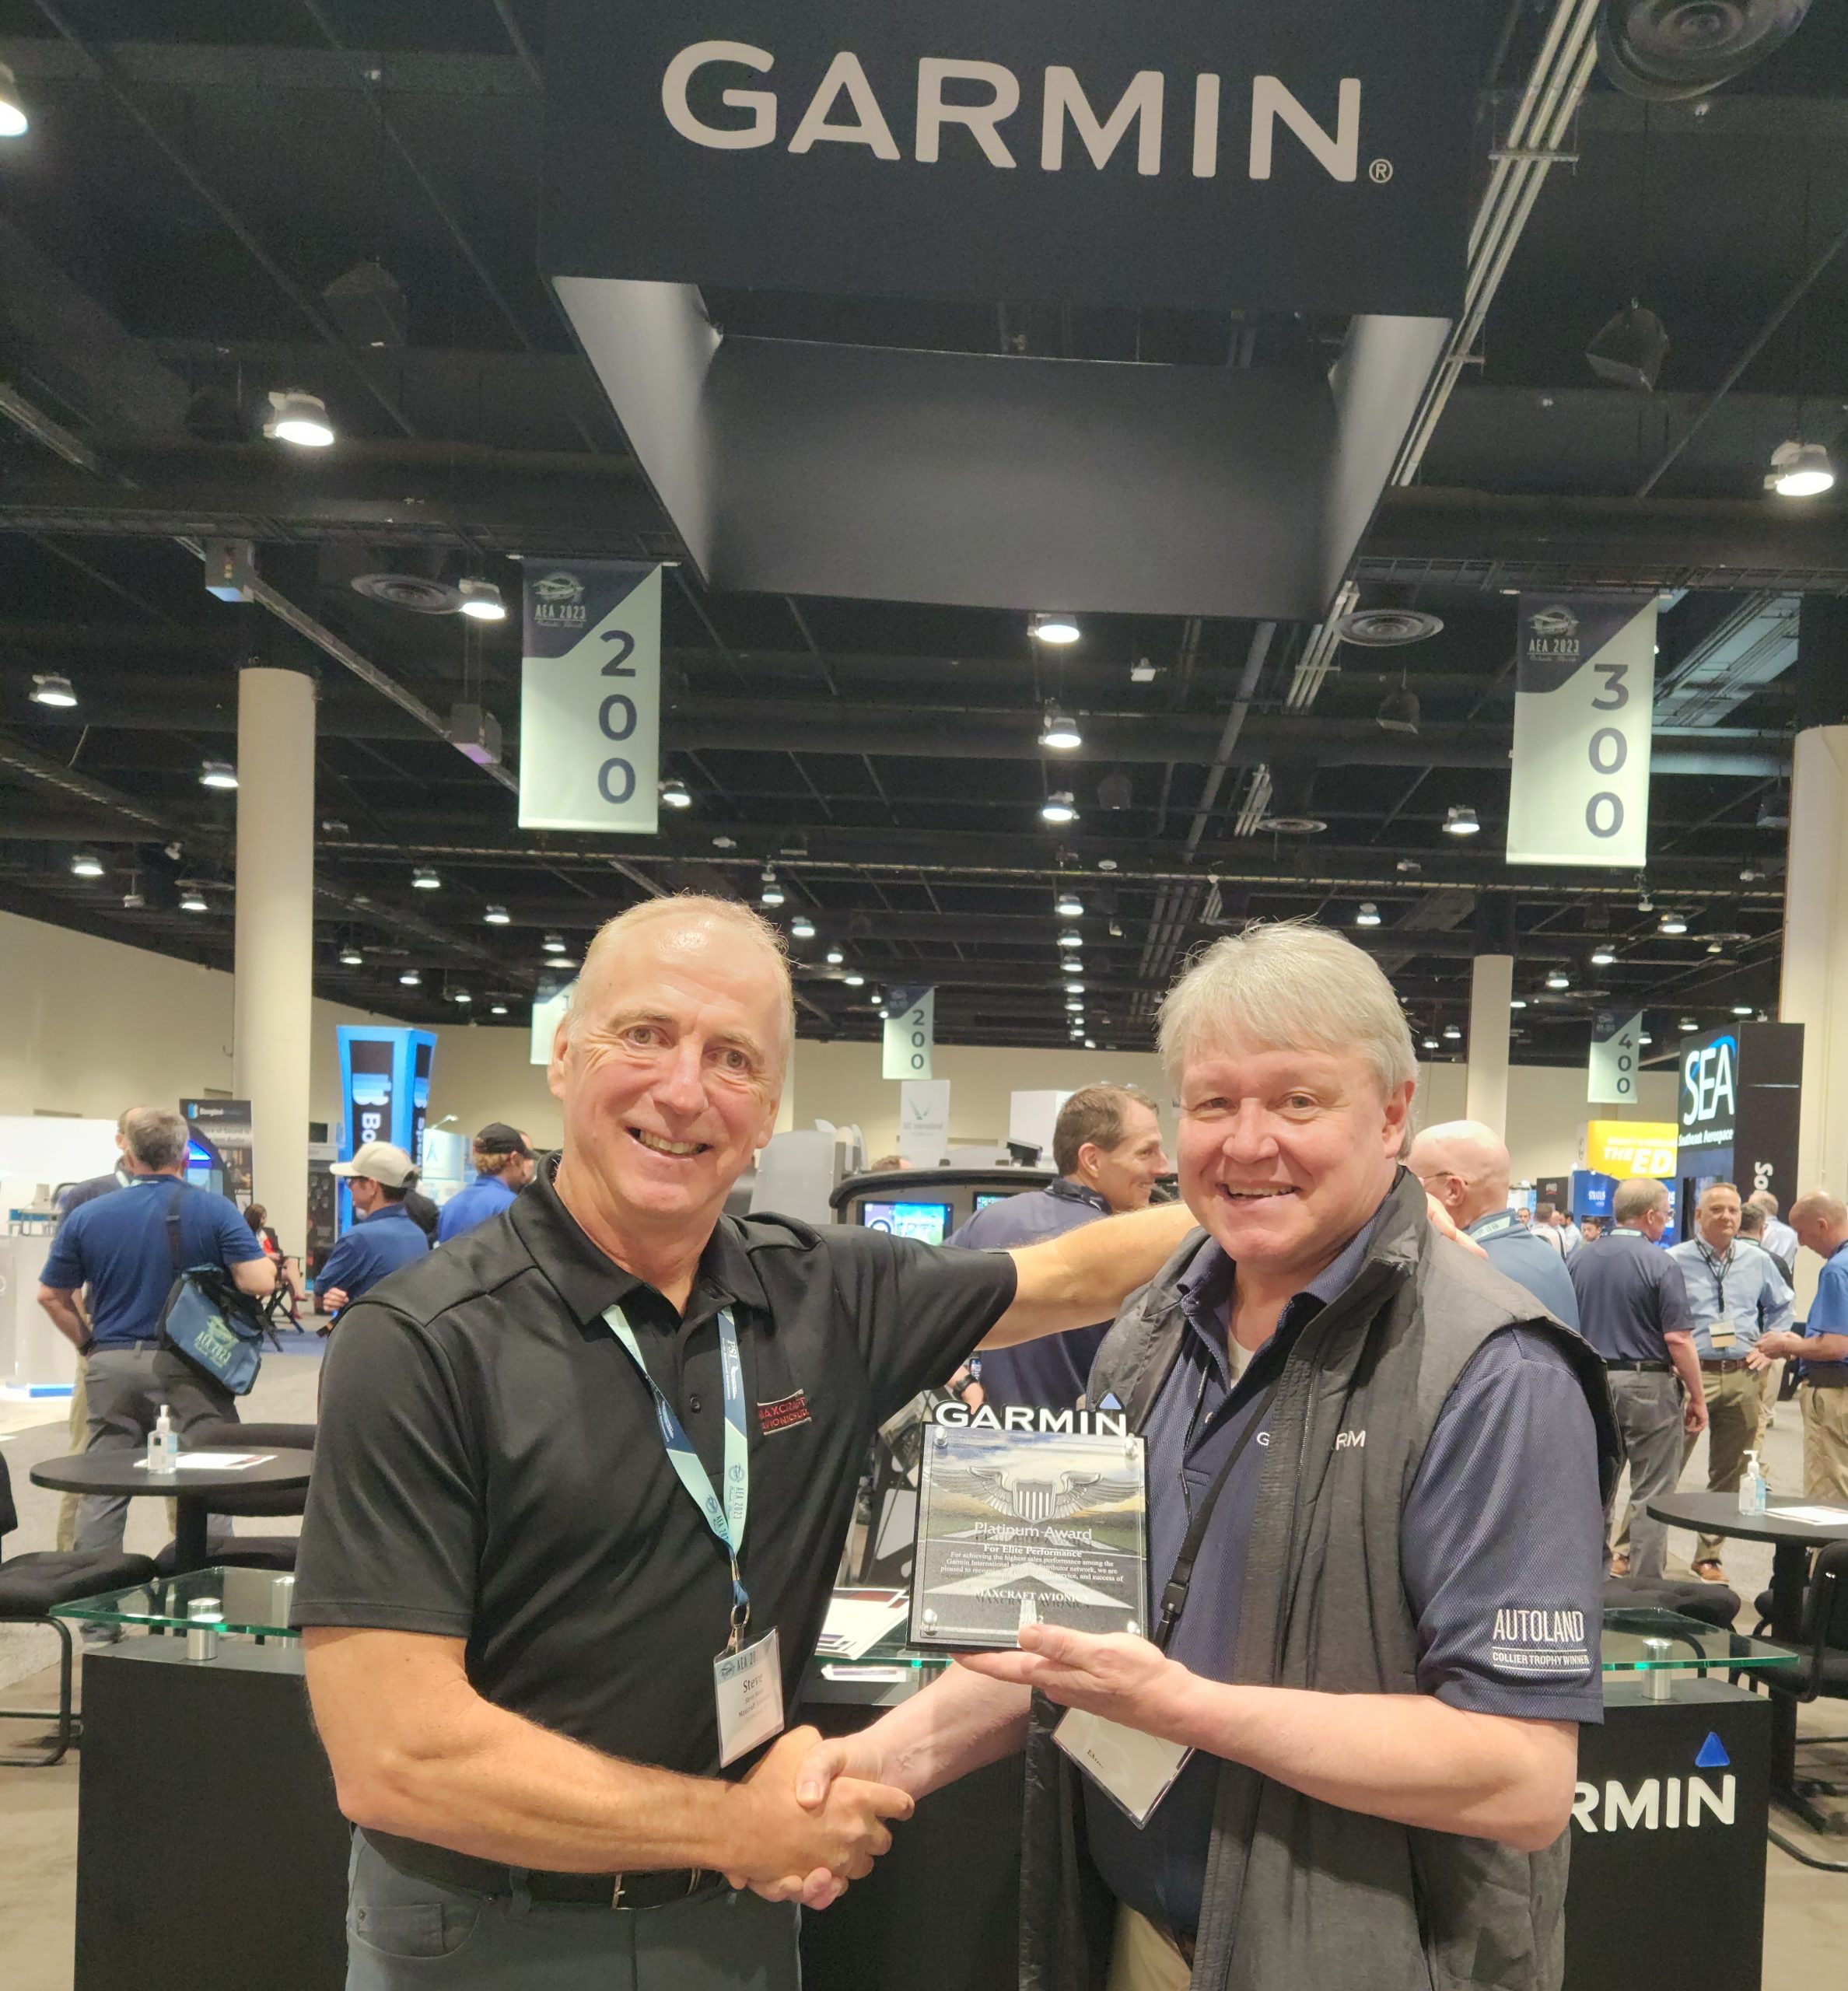 Maxcraft Director of Business Development, Steve Nunn Receives the Garmin Platinum Award from Garmin Representative Wayne McGhee